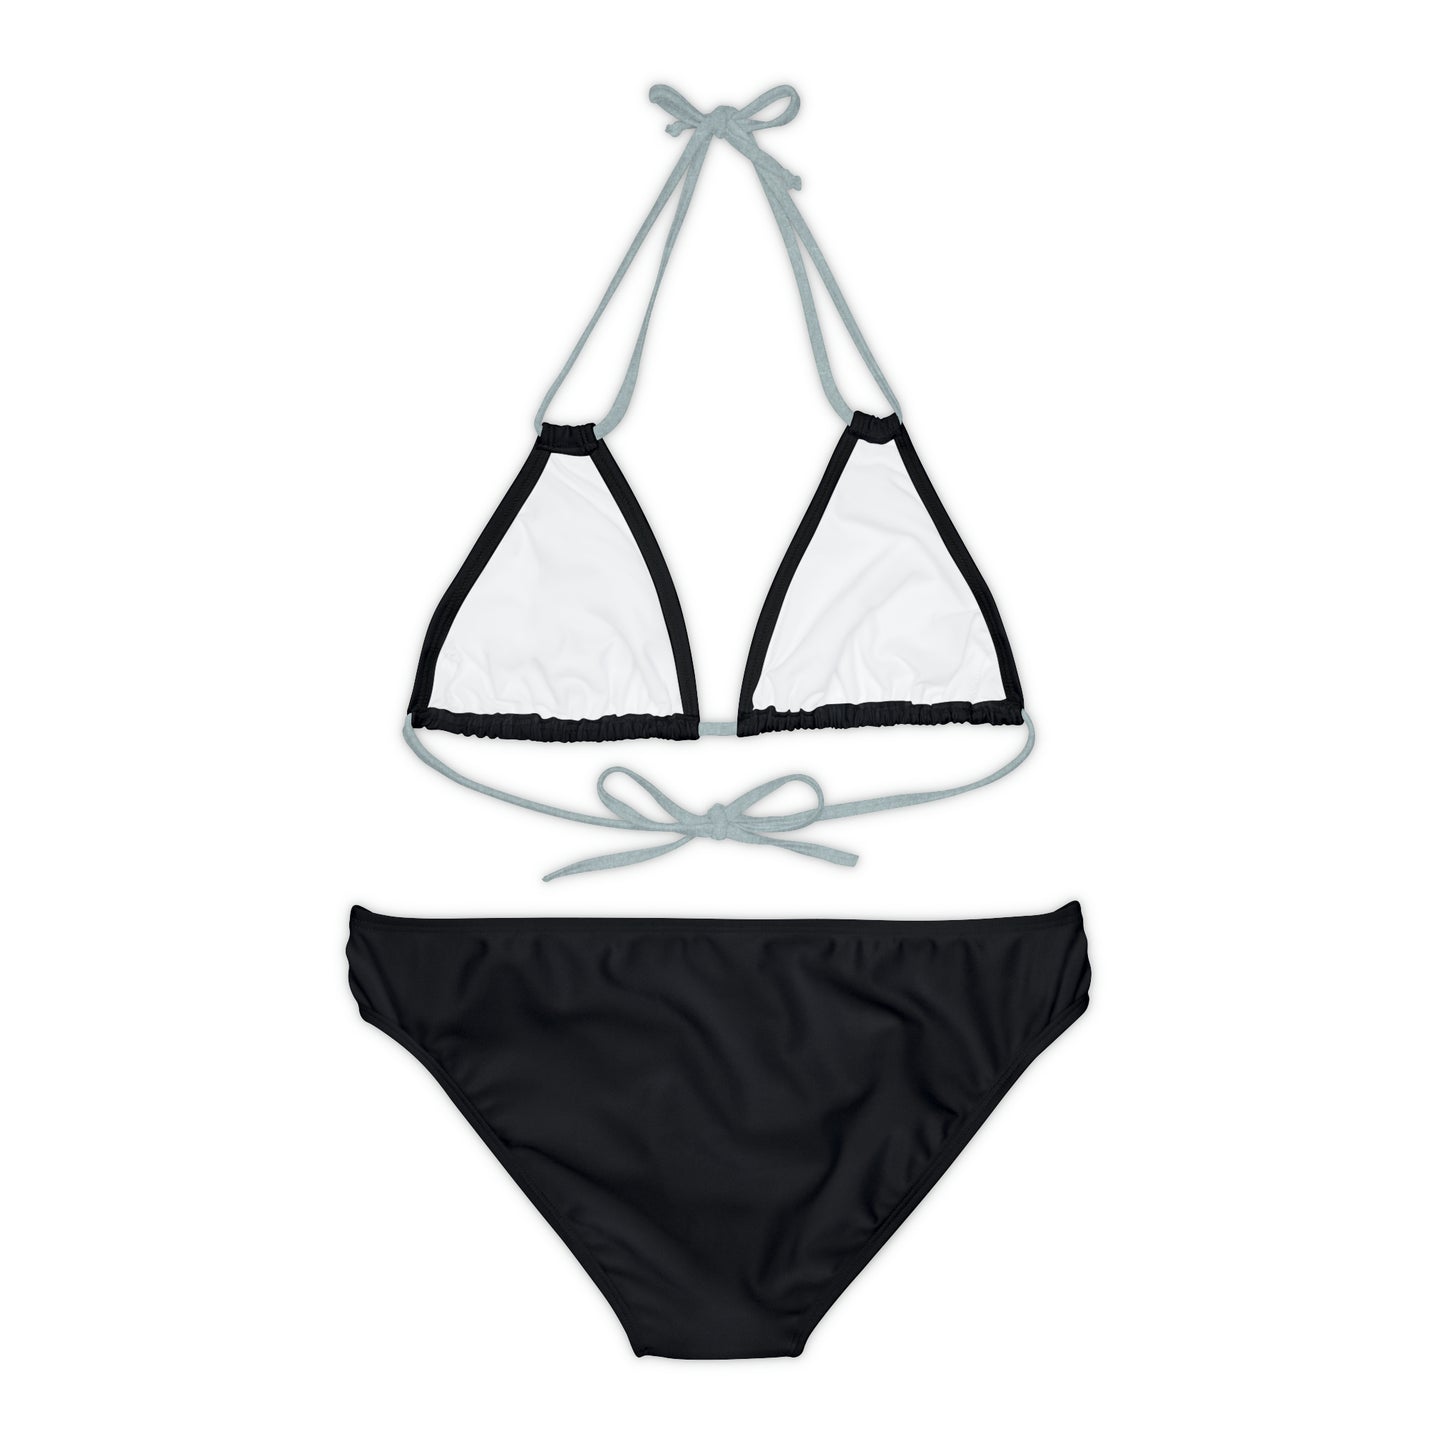 AlphaChic Strappy Bikini Set - Black